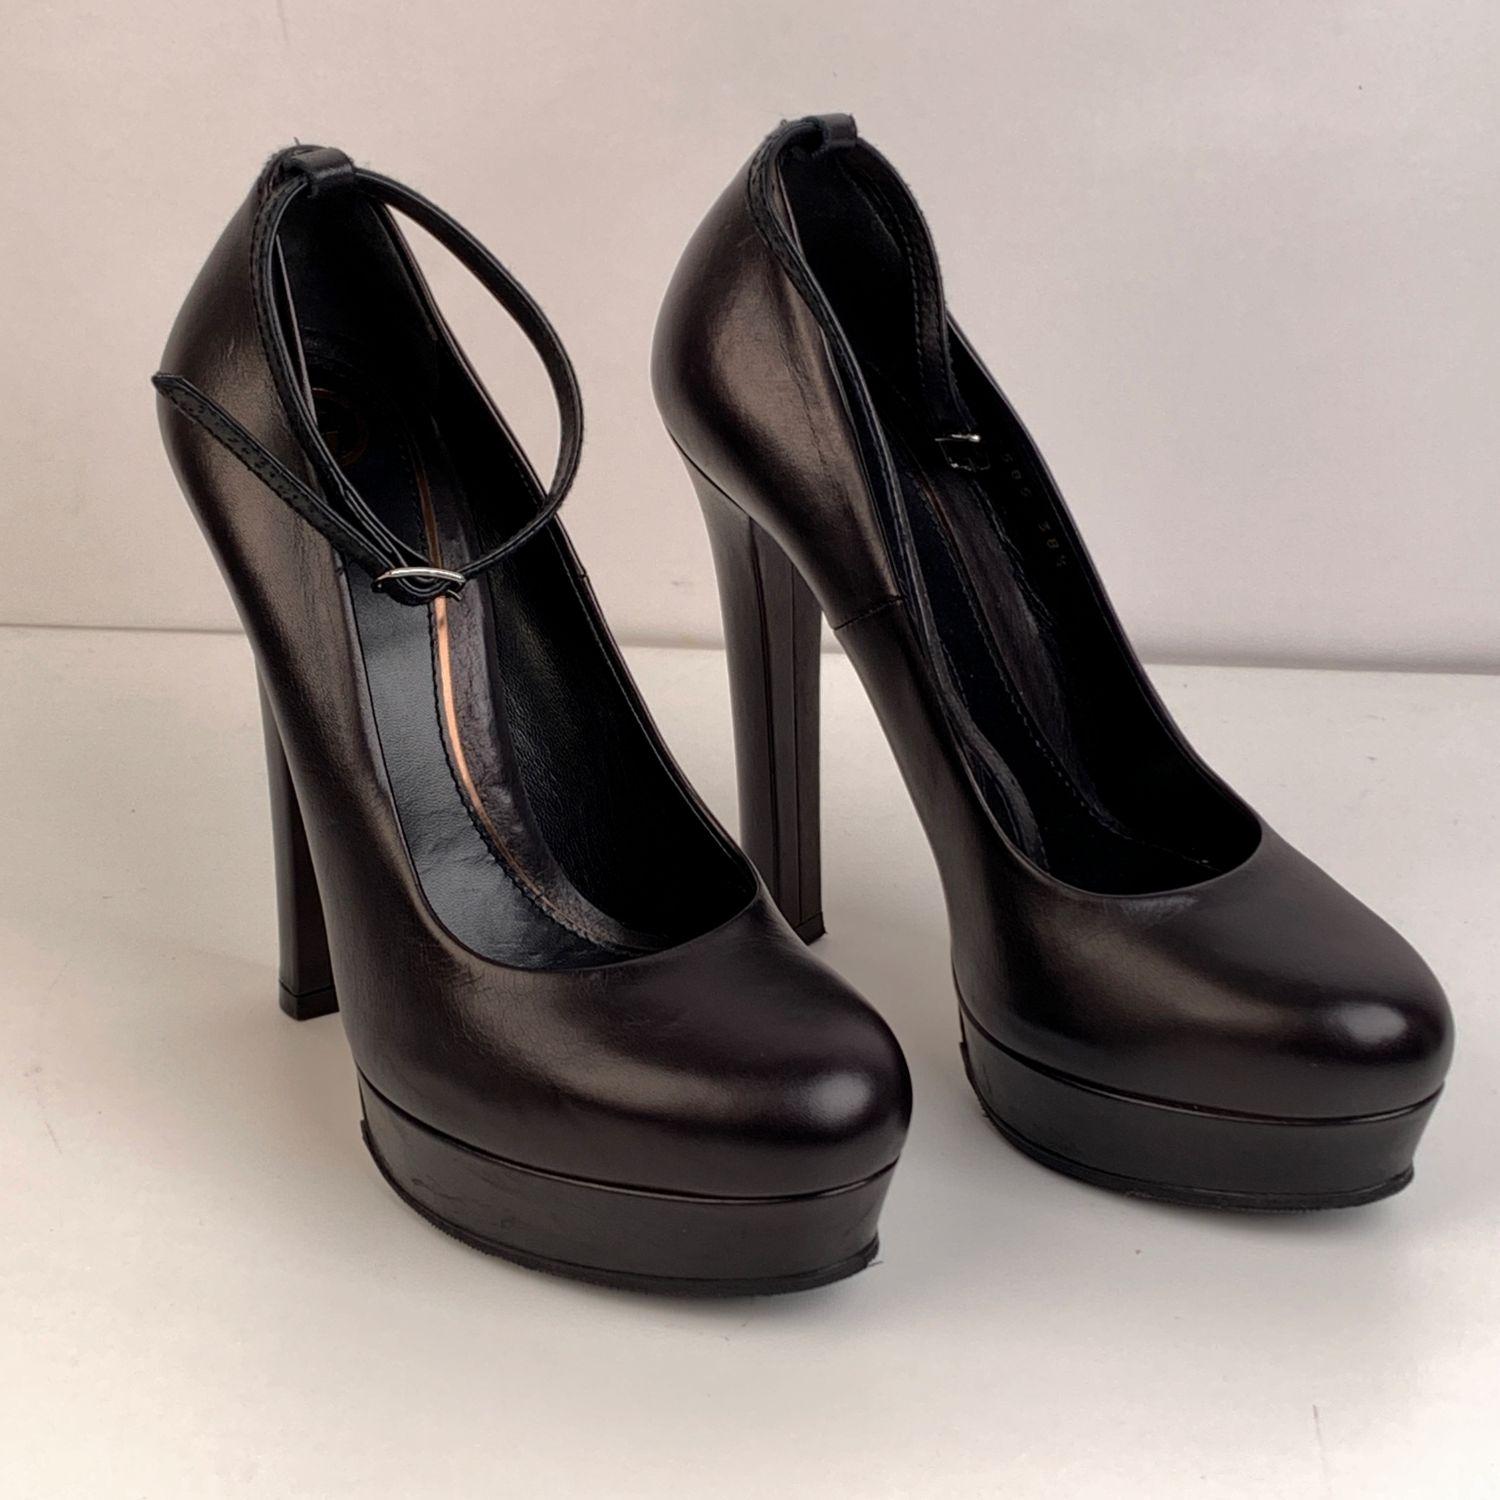 Women's Gucci Black Leather Platform Pumps Heels with Ankle Strap Size 38.5